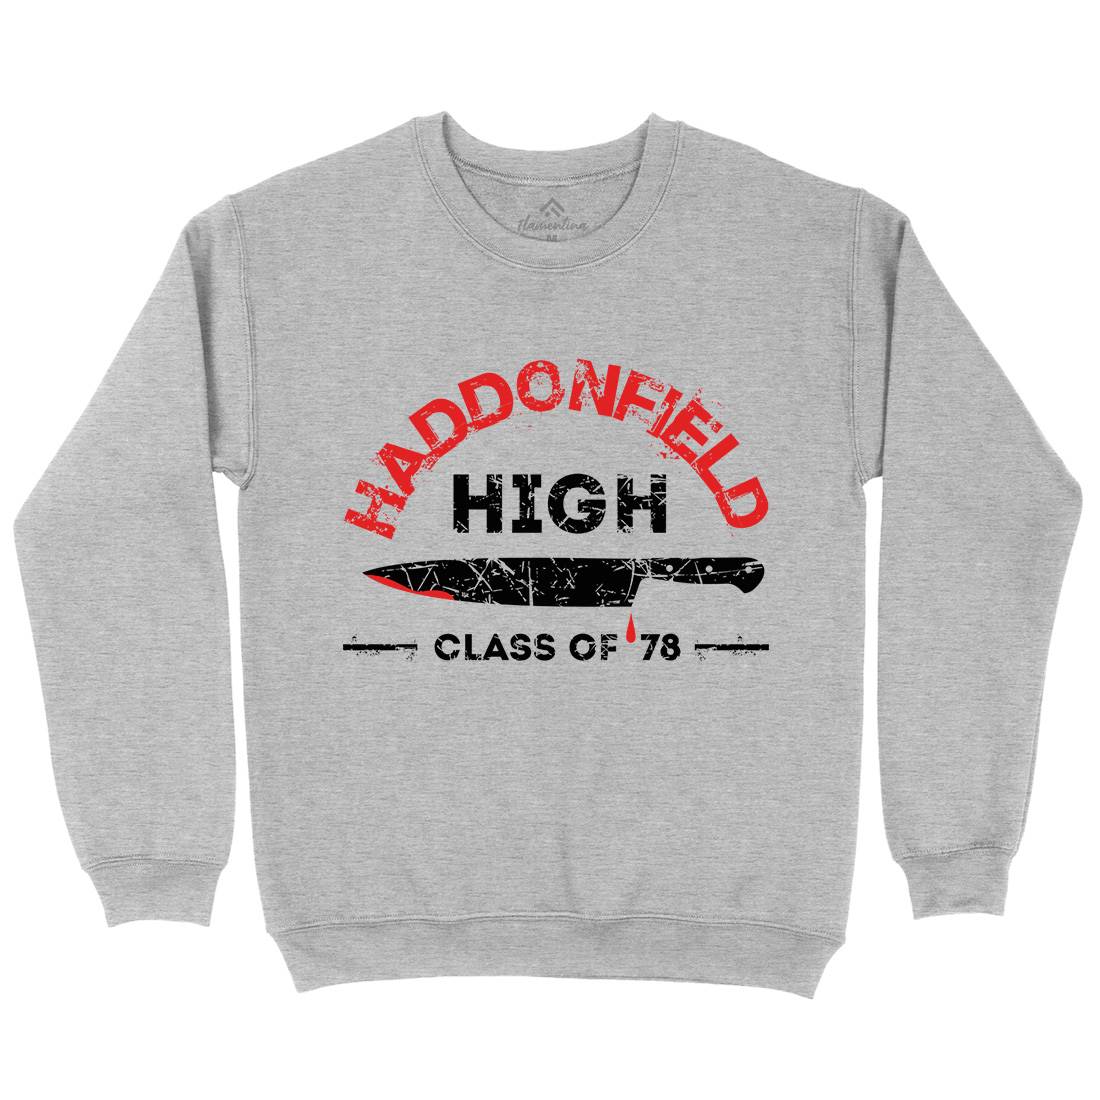 Haddonfield High Kids Crew Neck Sweatshirt Horror D371